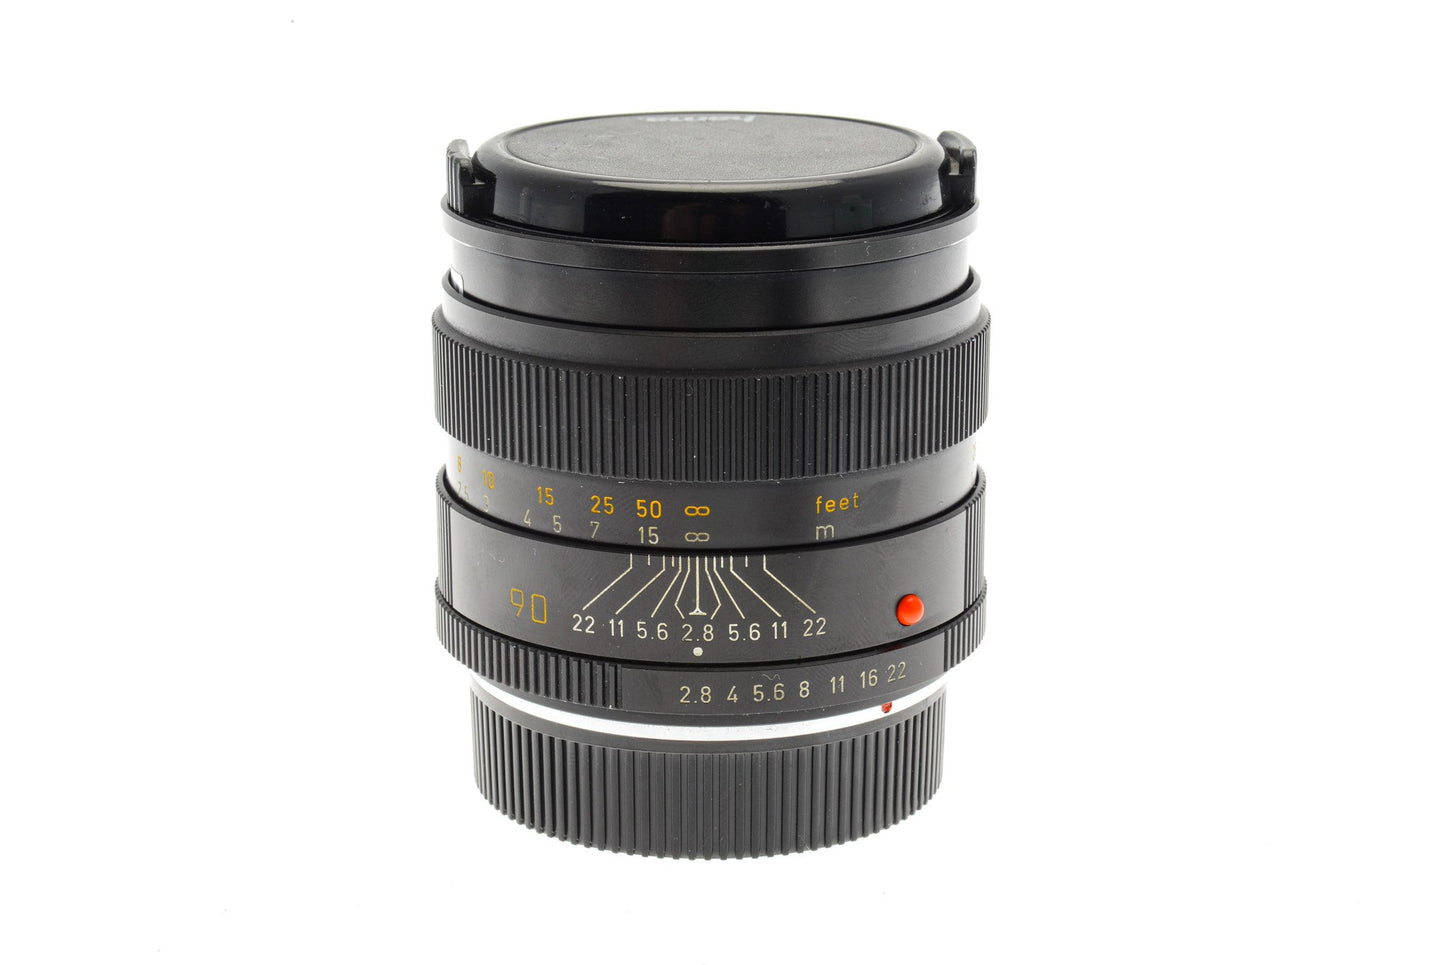 Leica 90mm f2.8 Elmarit-R (11806) - Lens